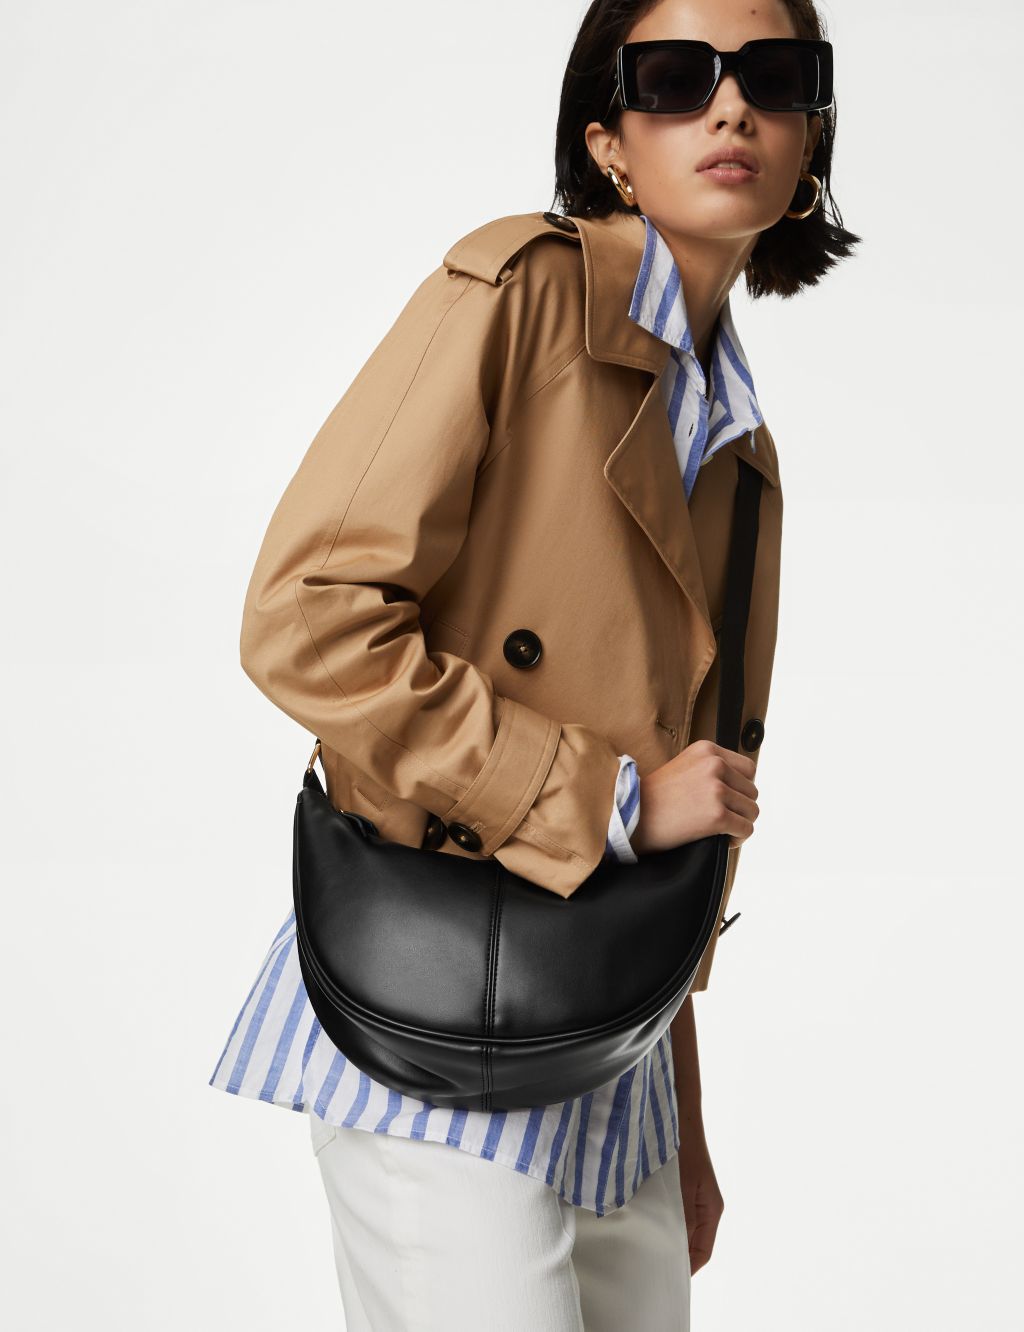 Handbags | Women's Bags | M&S